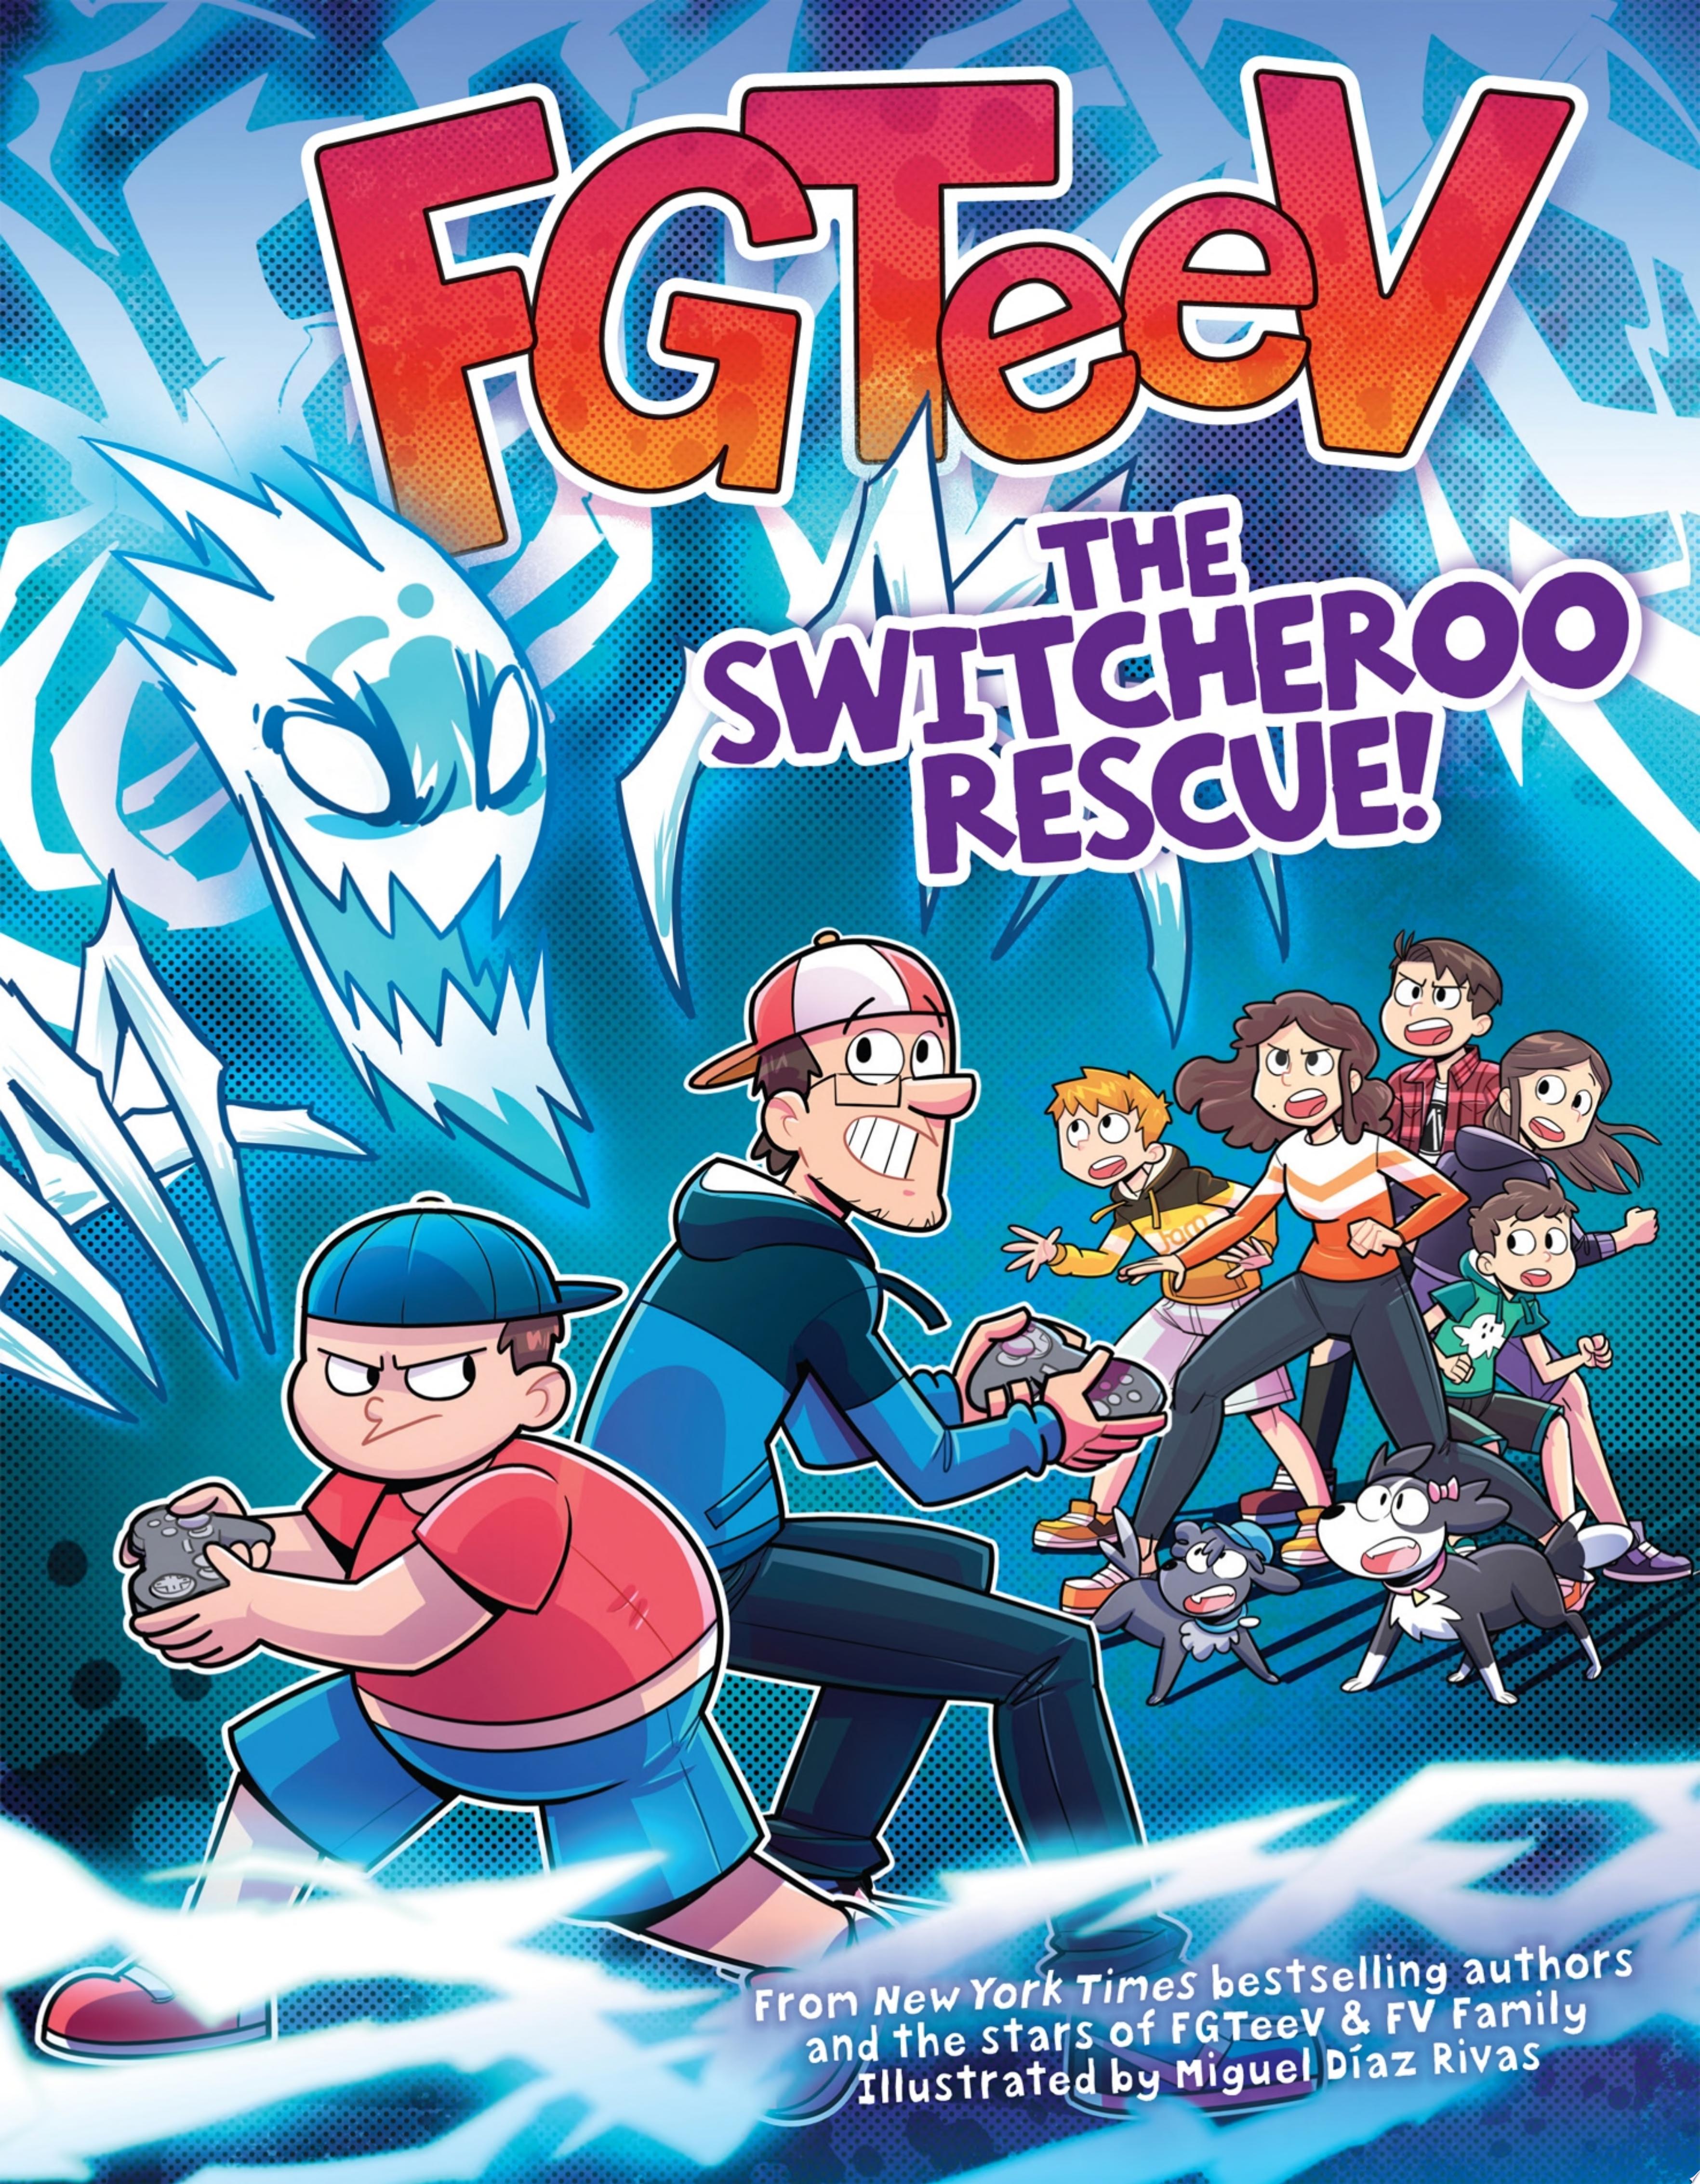 Image for "FGTeeV: The Switcheroo Rescue!"